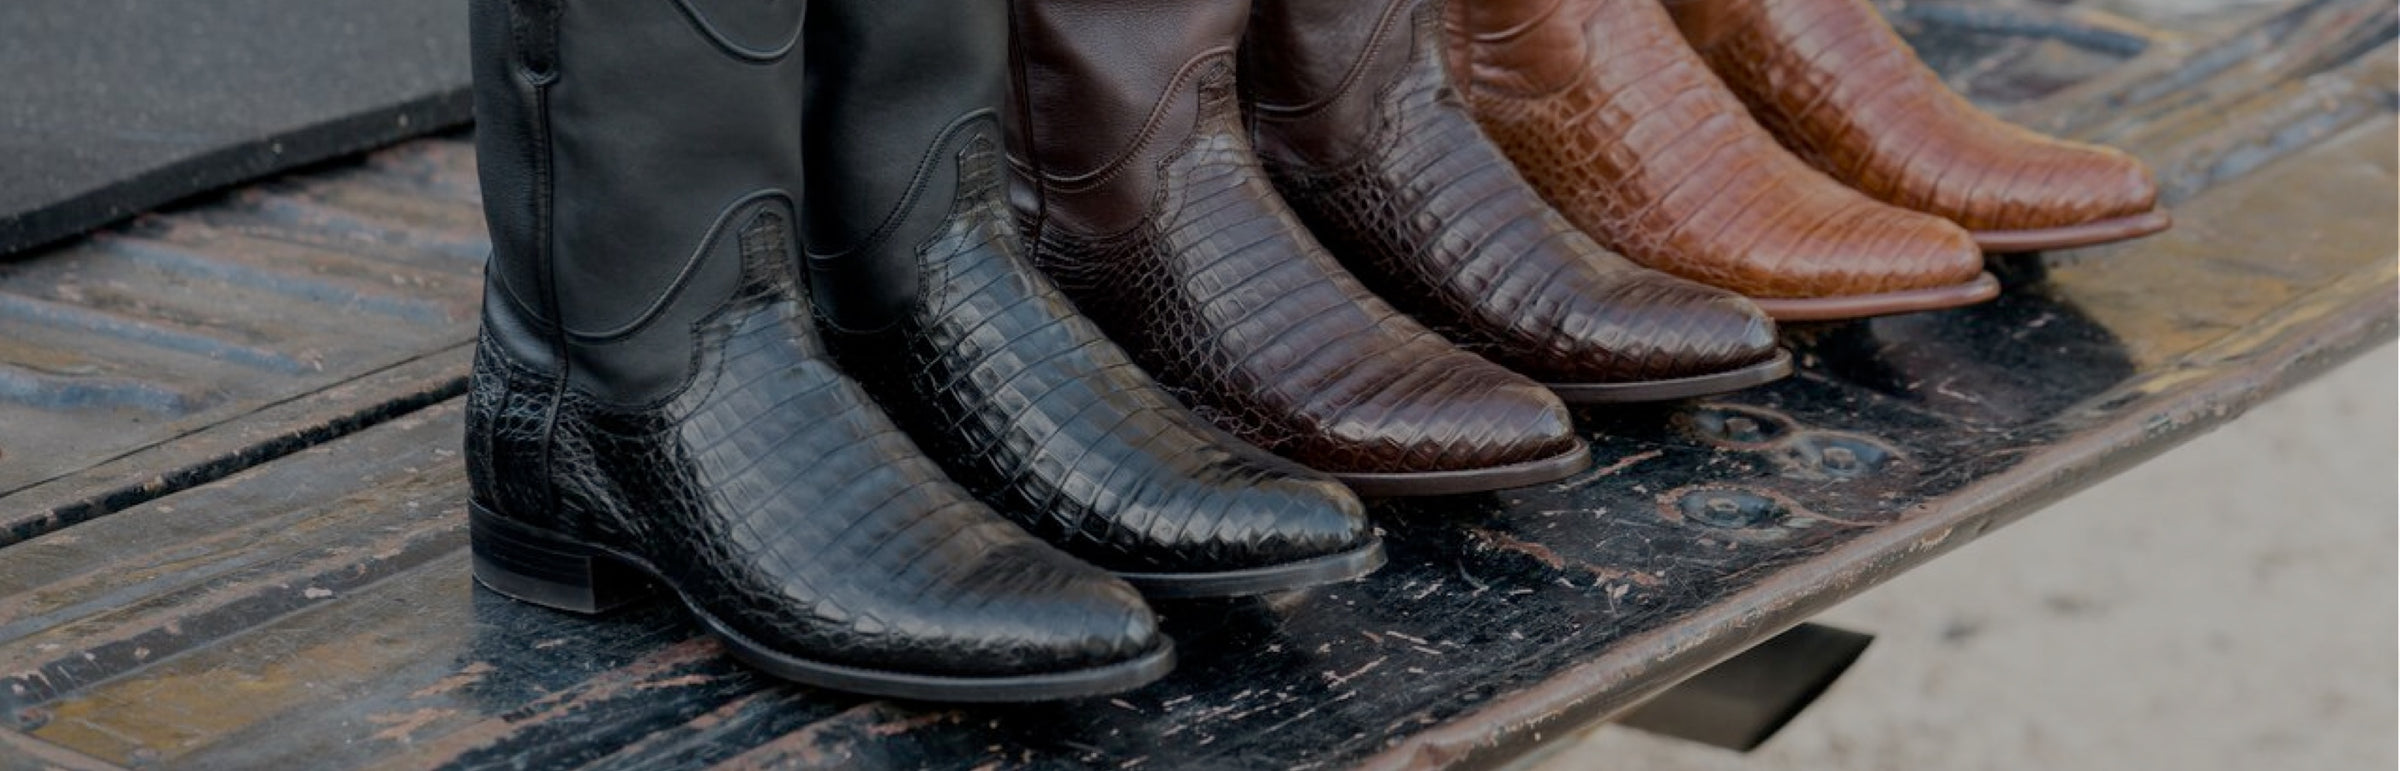 Sale > tecovas boots cost > in stock